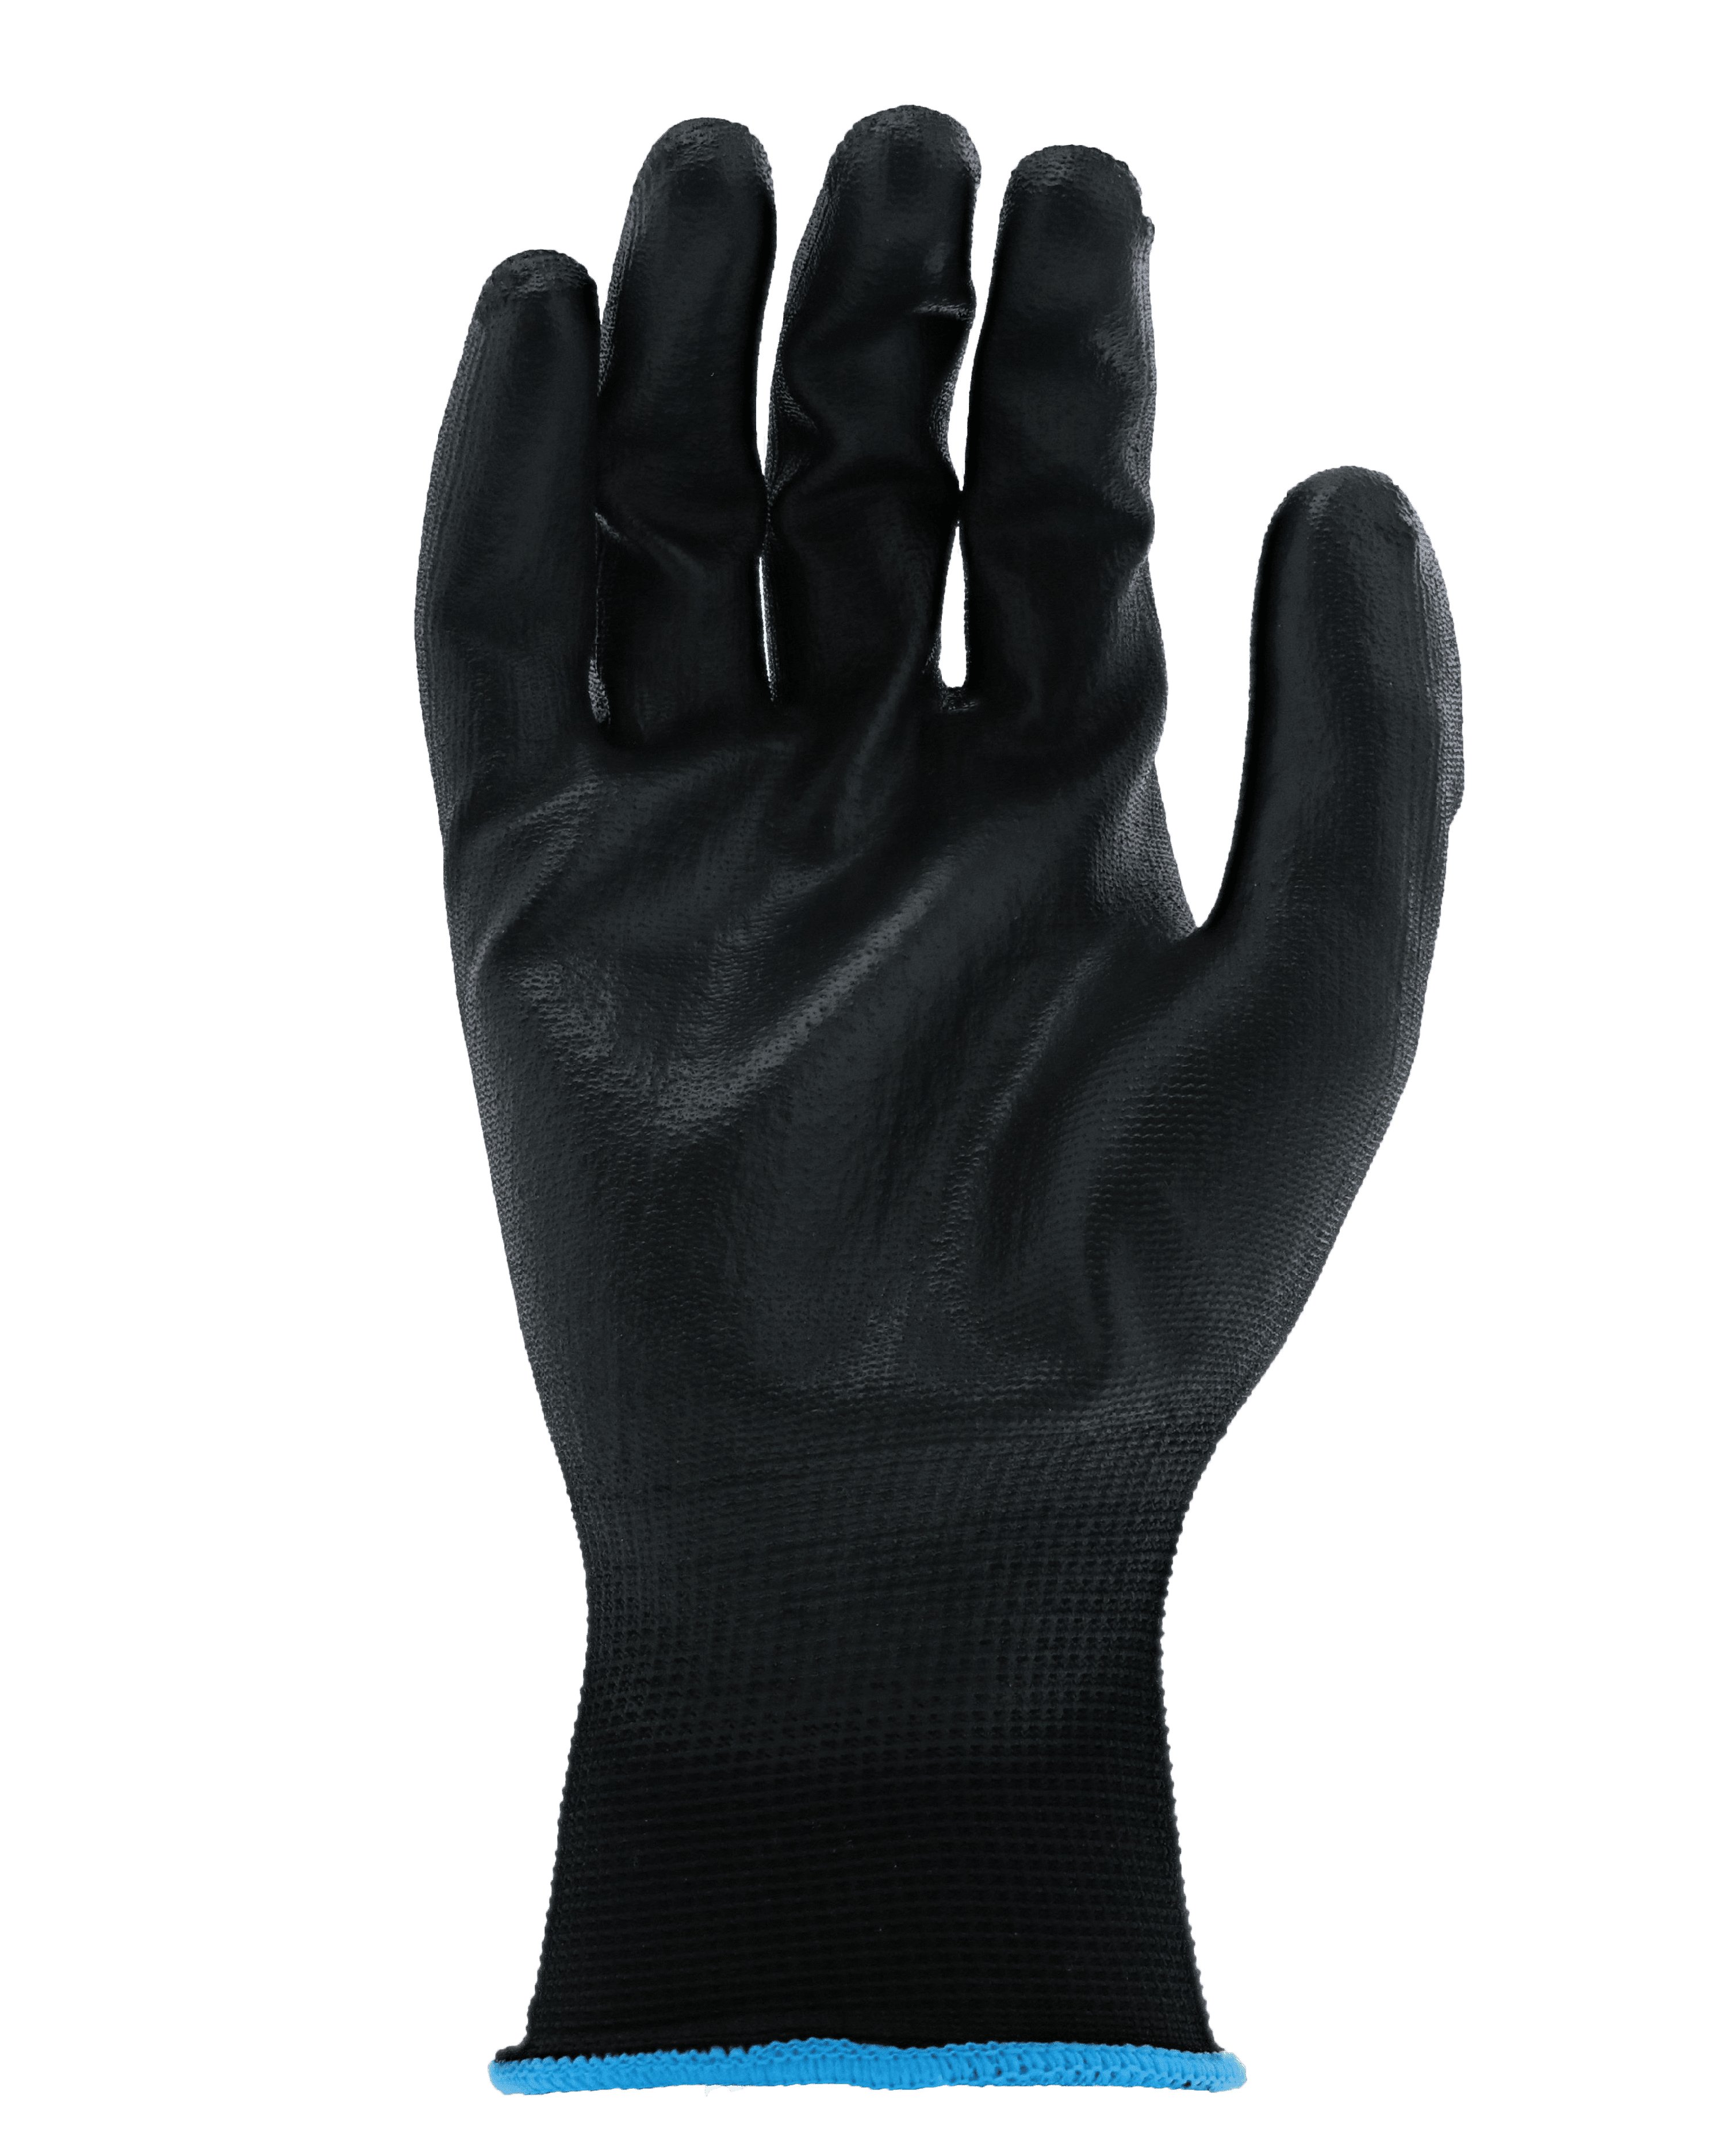 Grease Monkey Gorilla Grip Large Gloves 3-Pair - Stateside Equipment Sales